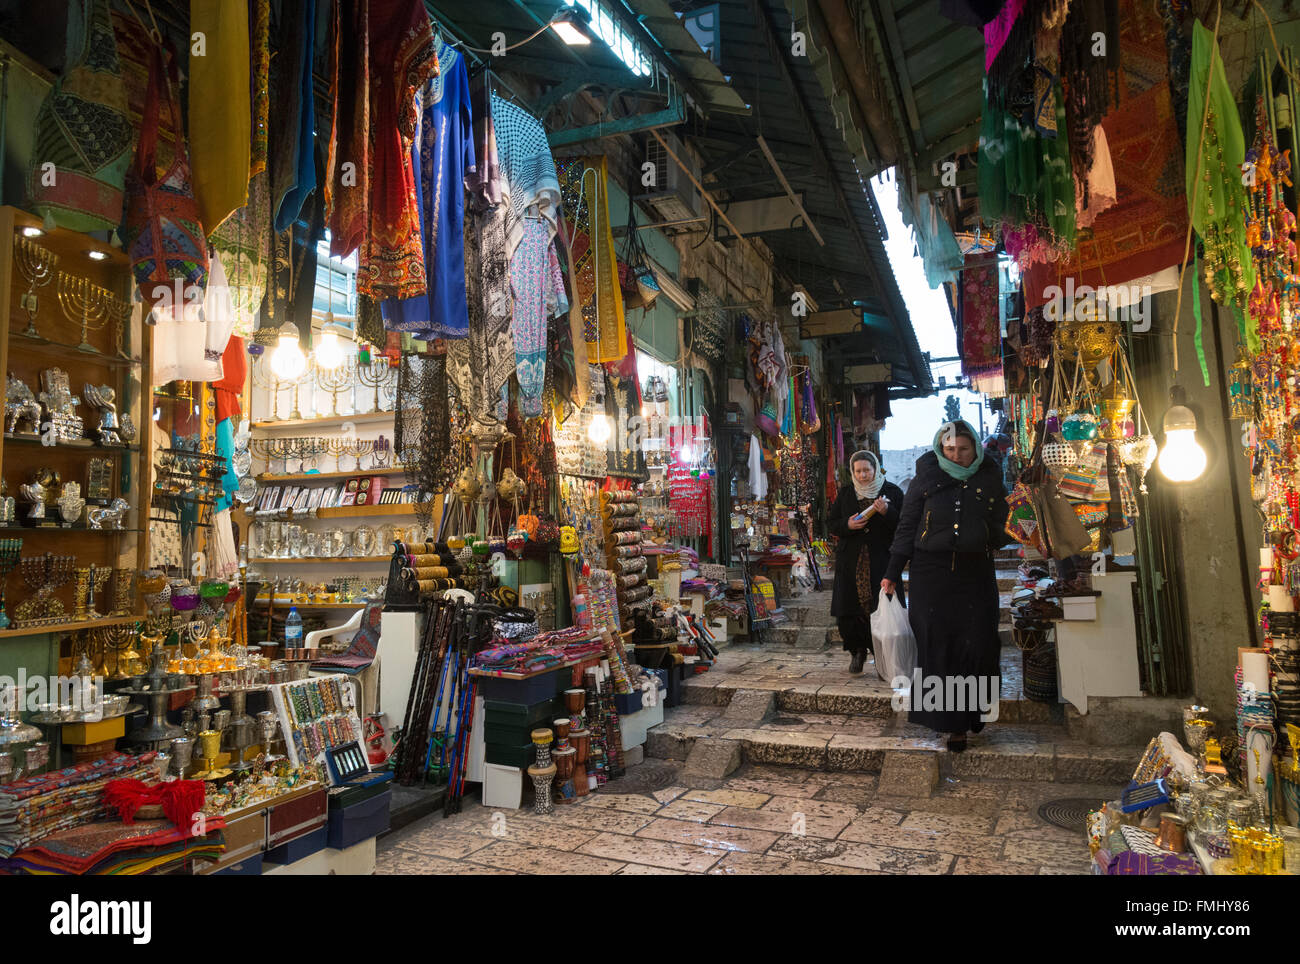 The tourist market. Jerusalem Old City. Israel. Stock Photo